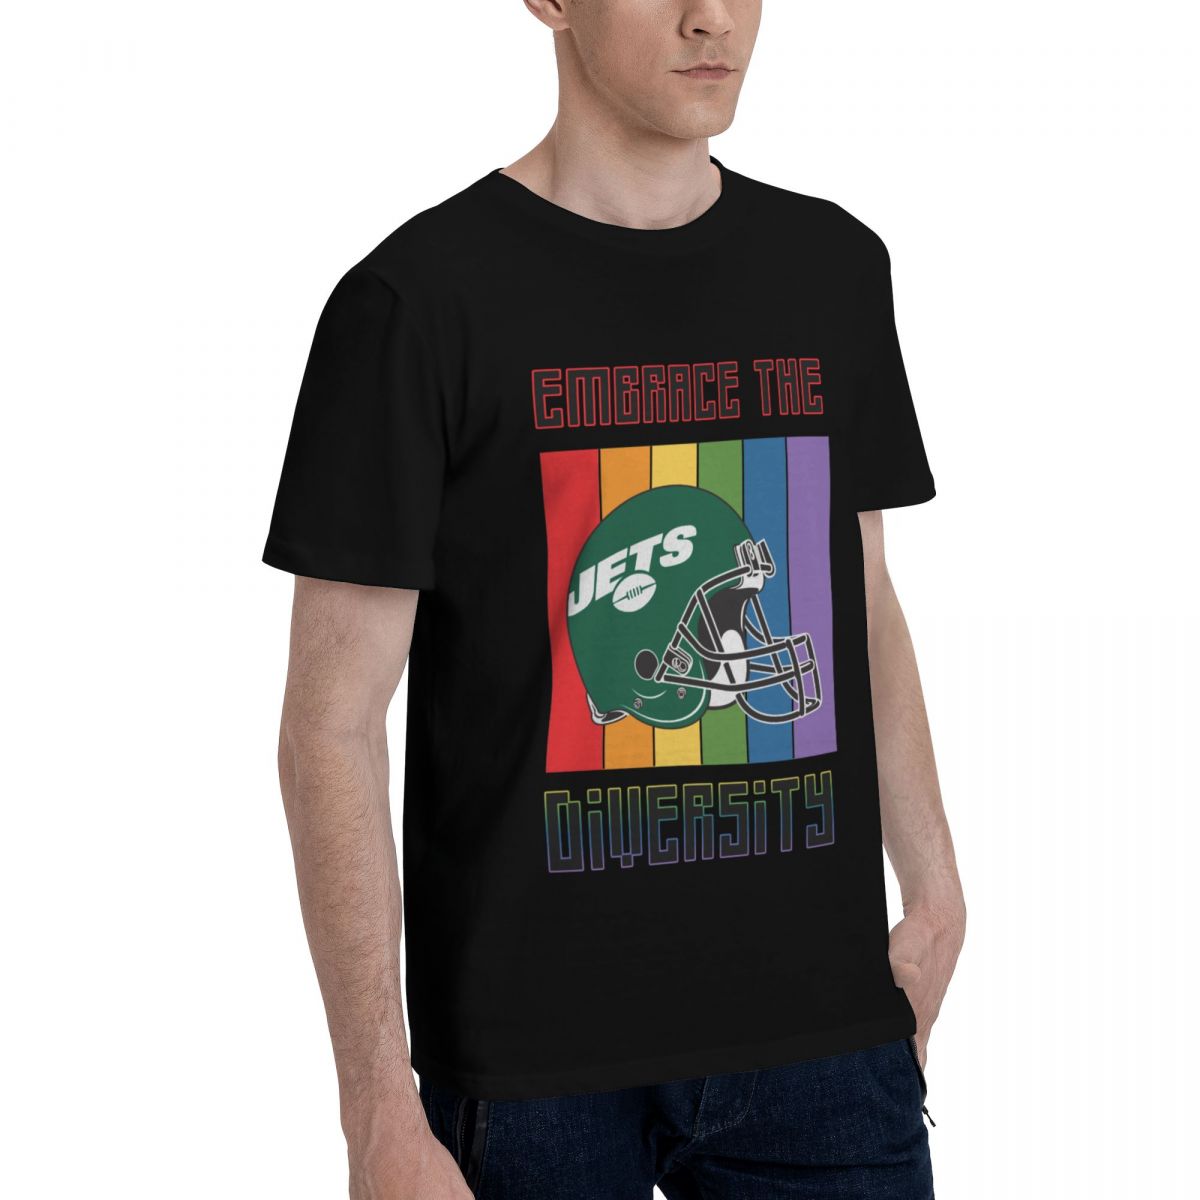 New York Jets Embrace The Diversity Cotton Men's T-Shirt